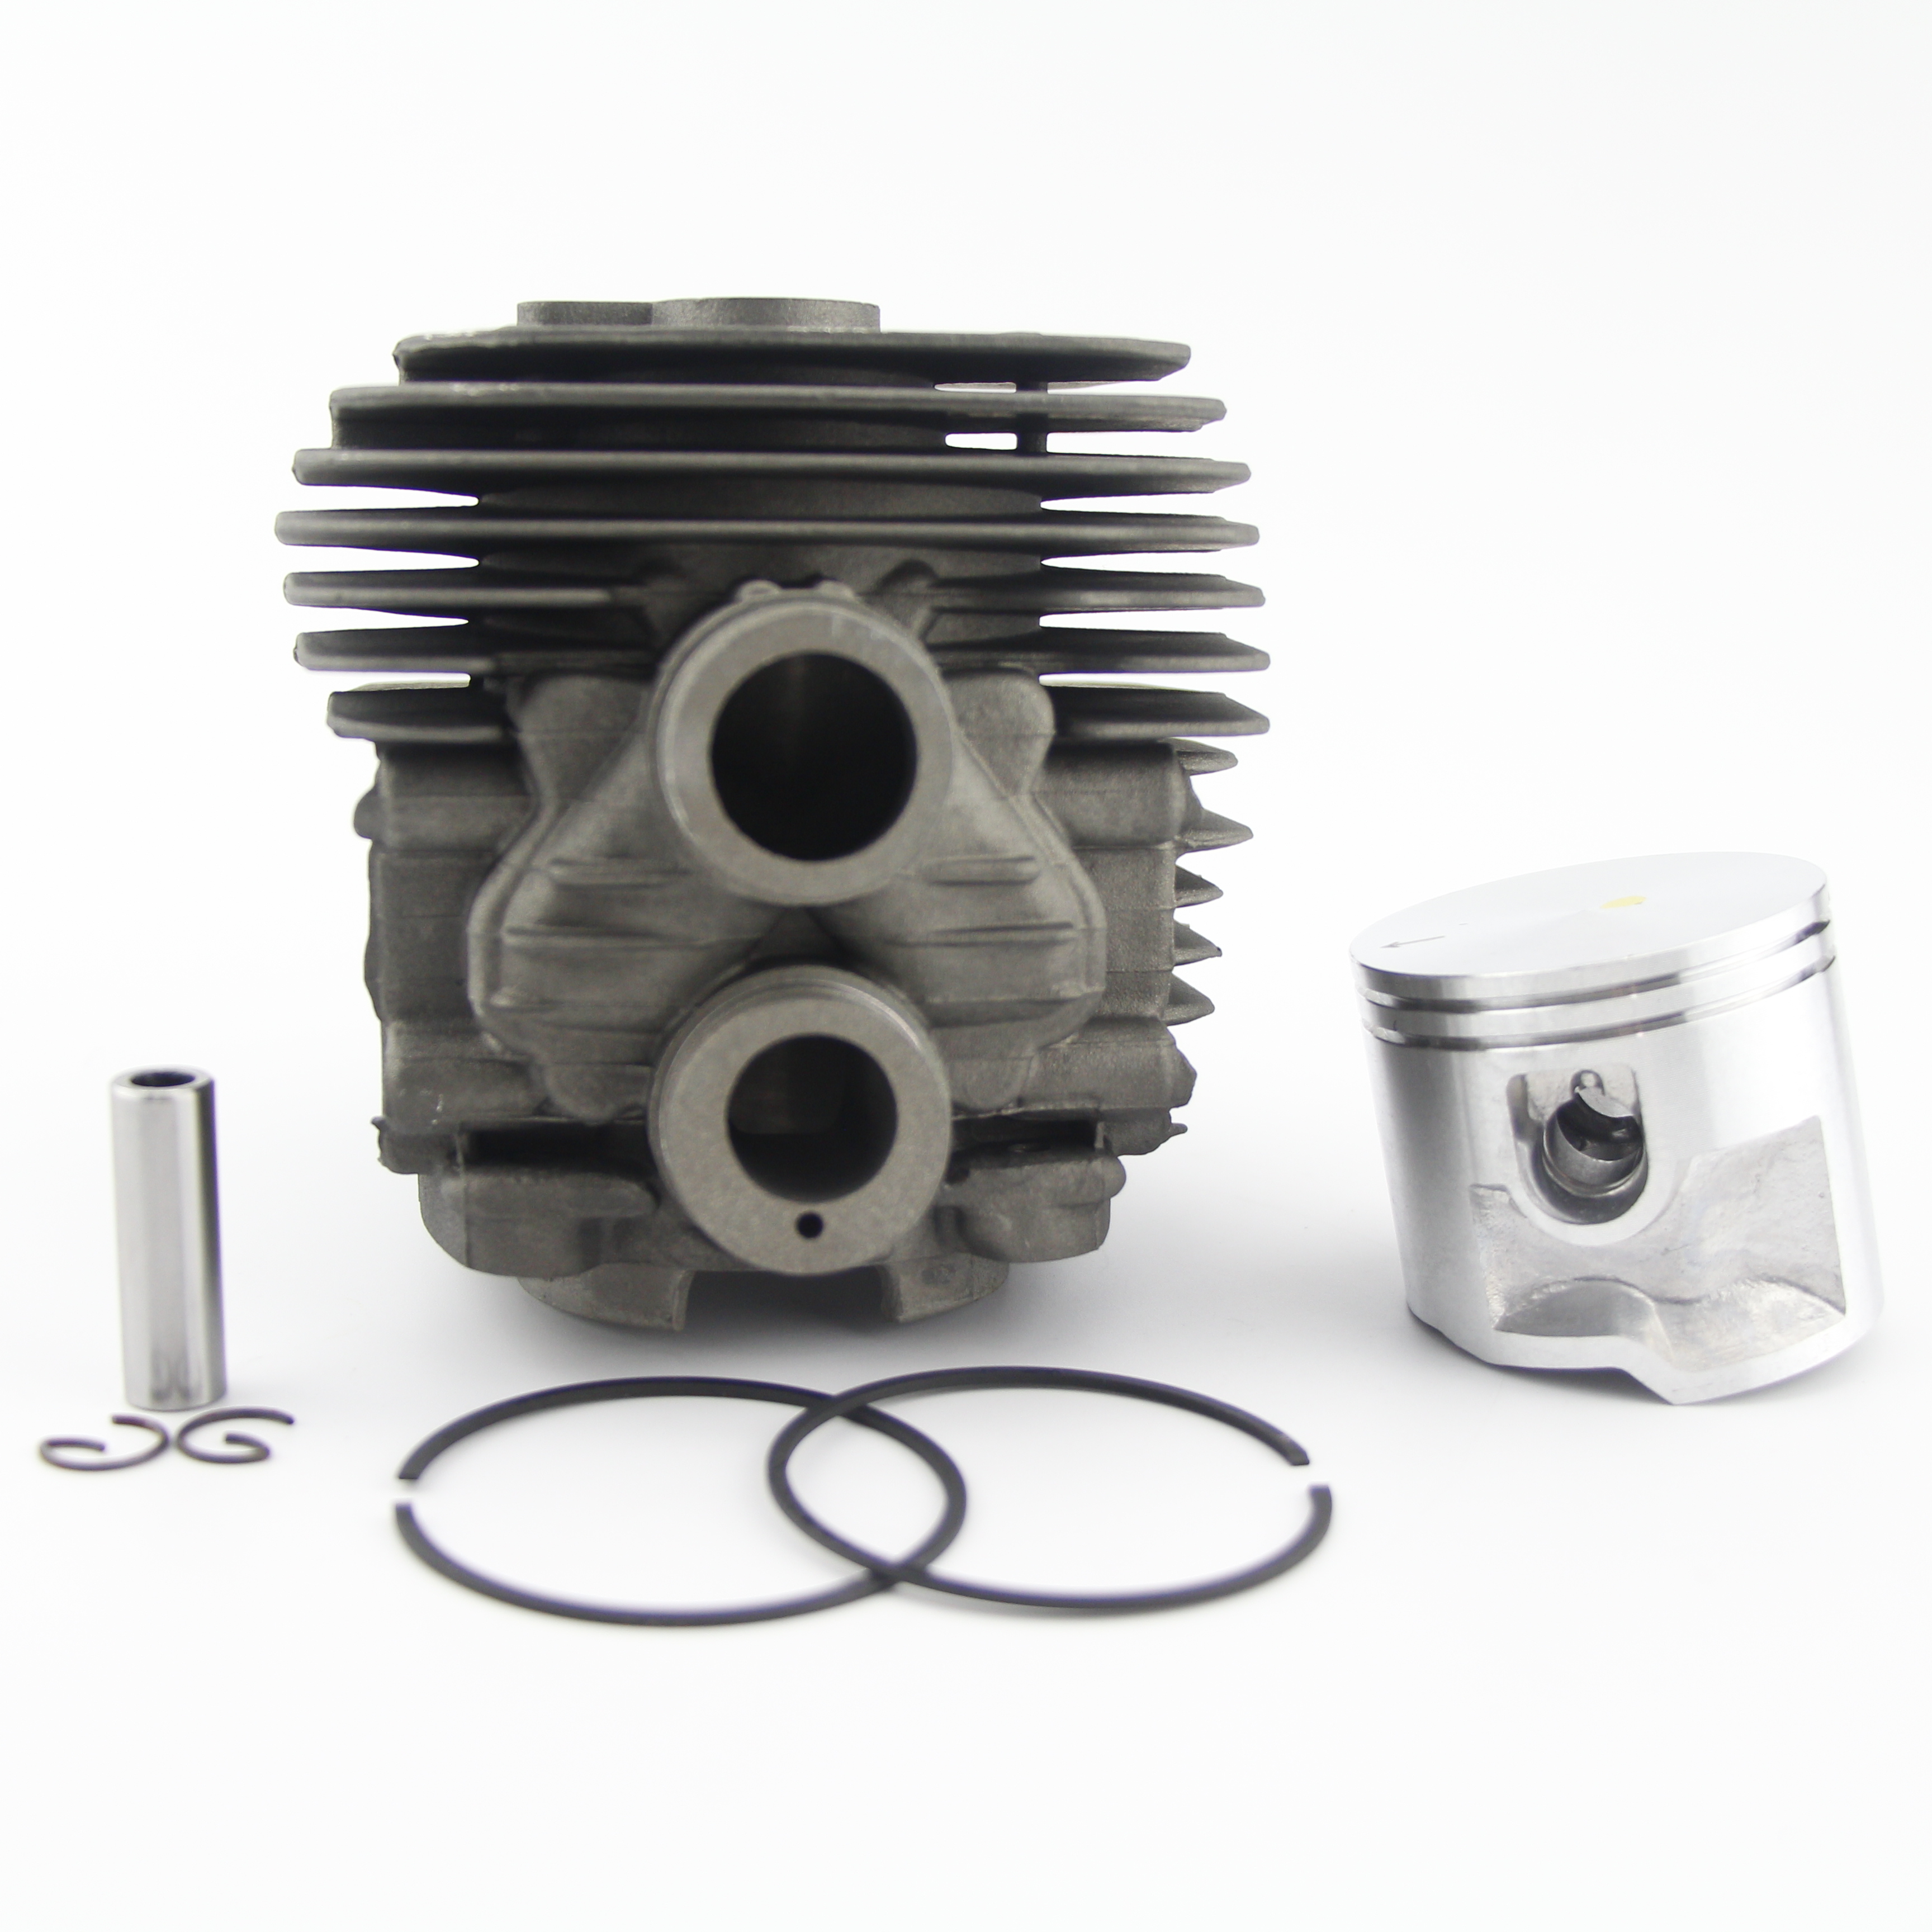 Stihl TS420 Cylinder and Piston Rebuild Kit w/ Gasket Fits TS 420 cutoff saw 